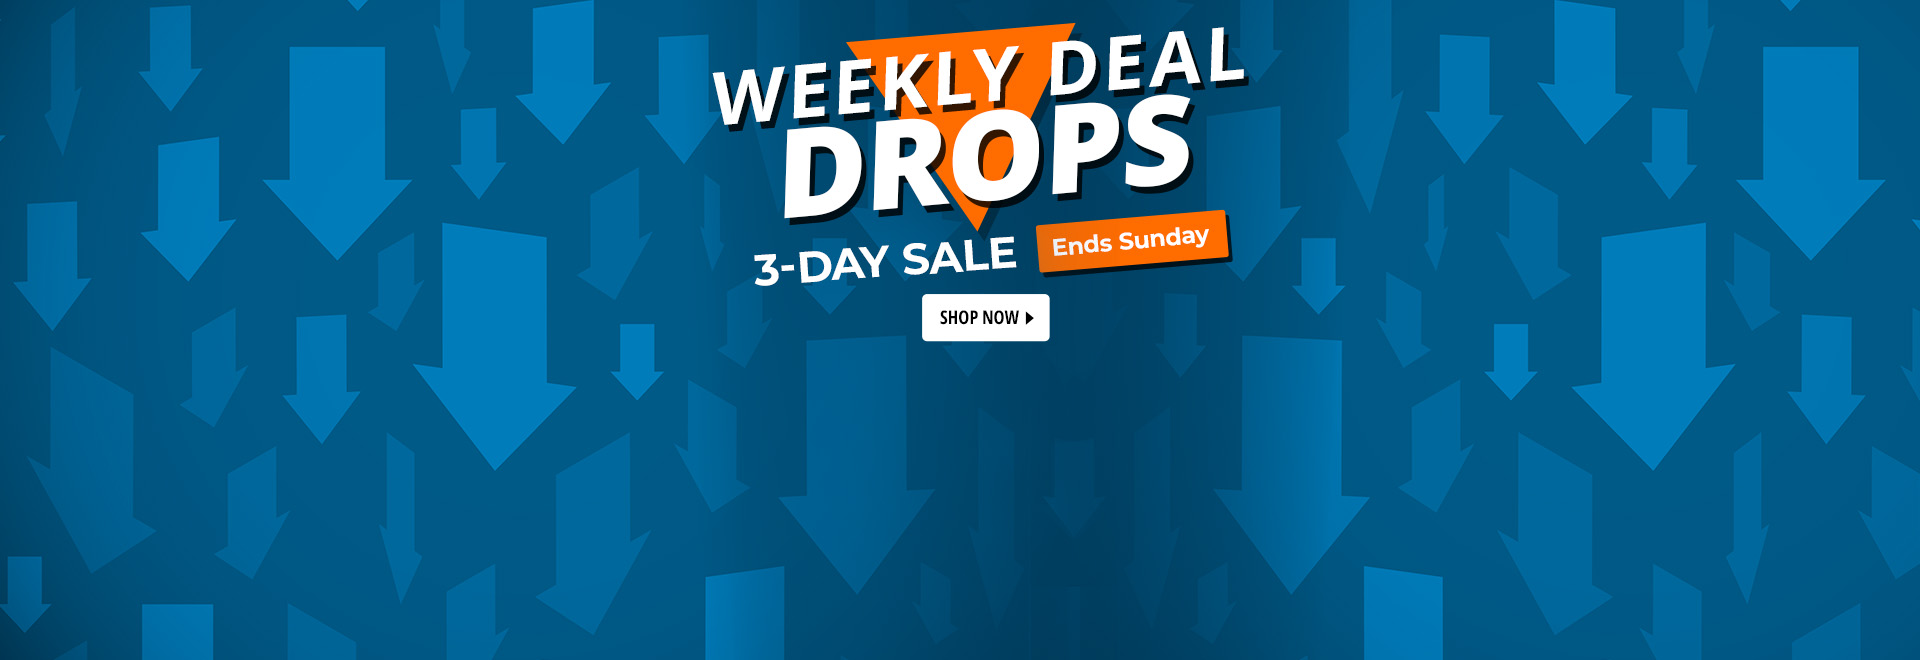 Weekly Deal Drops